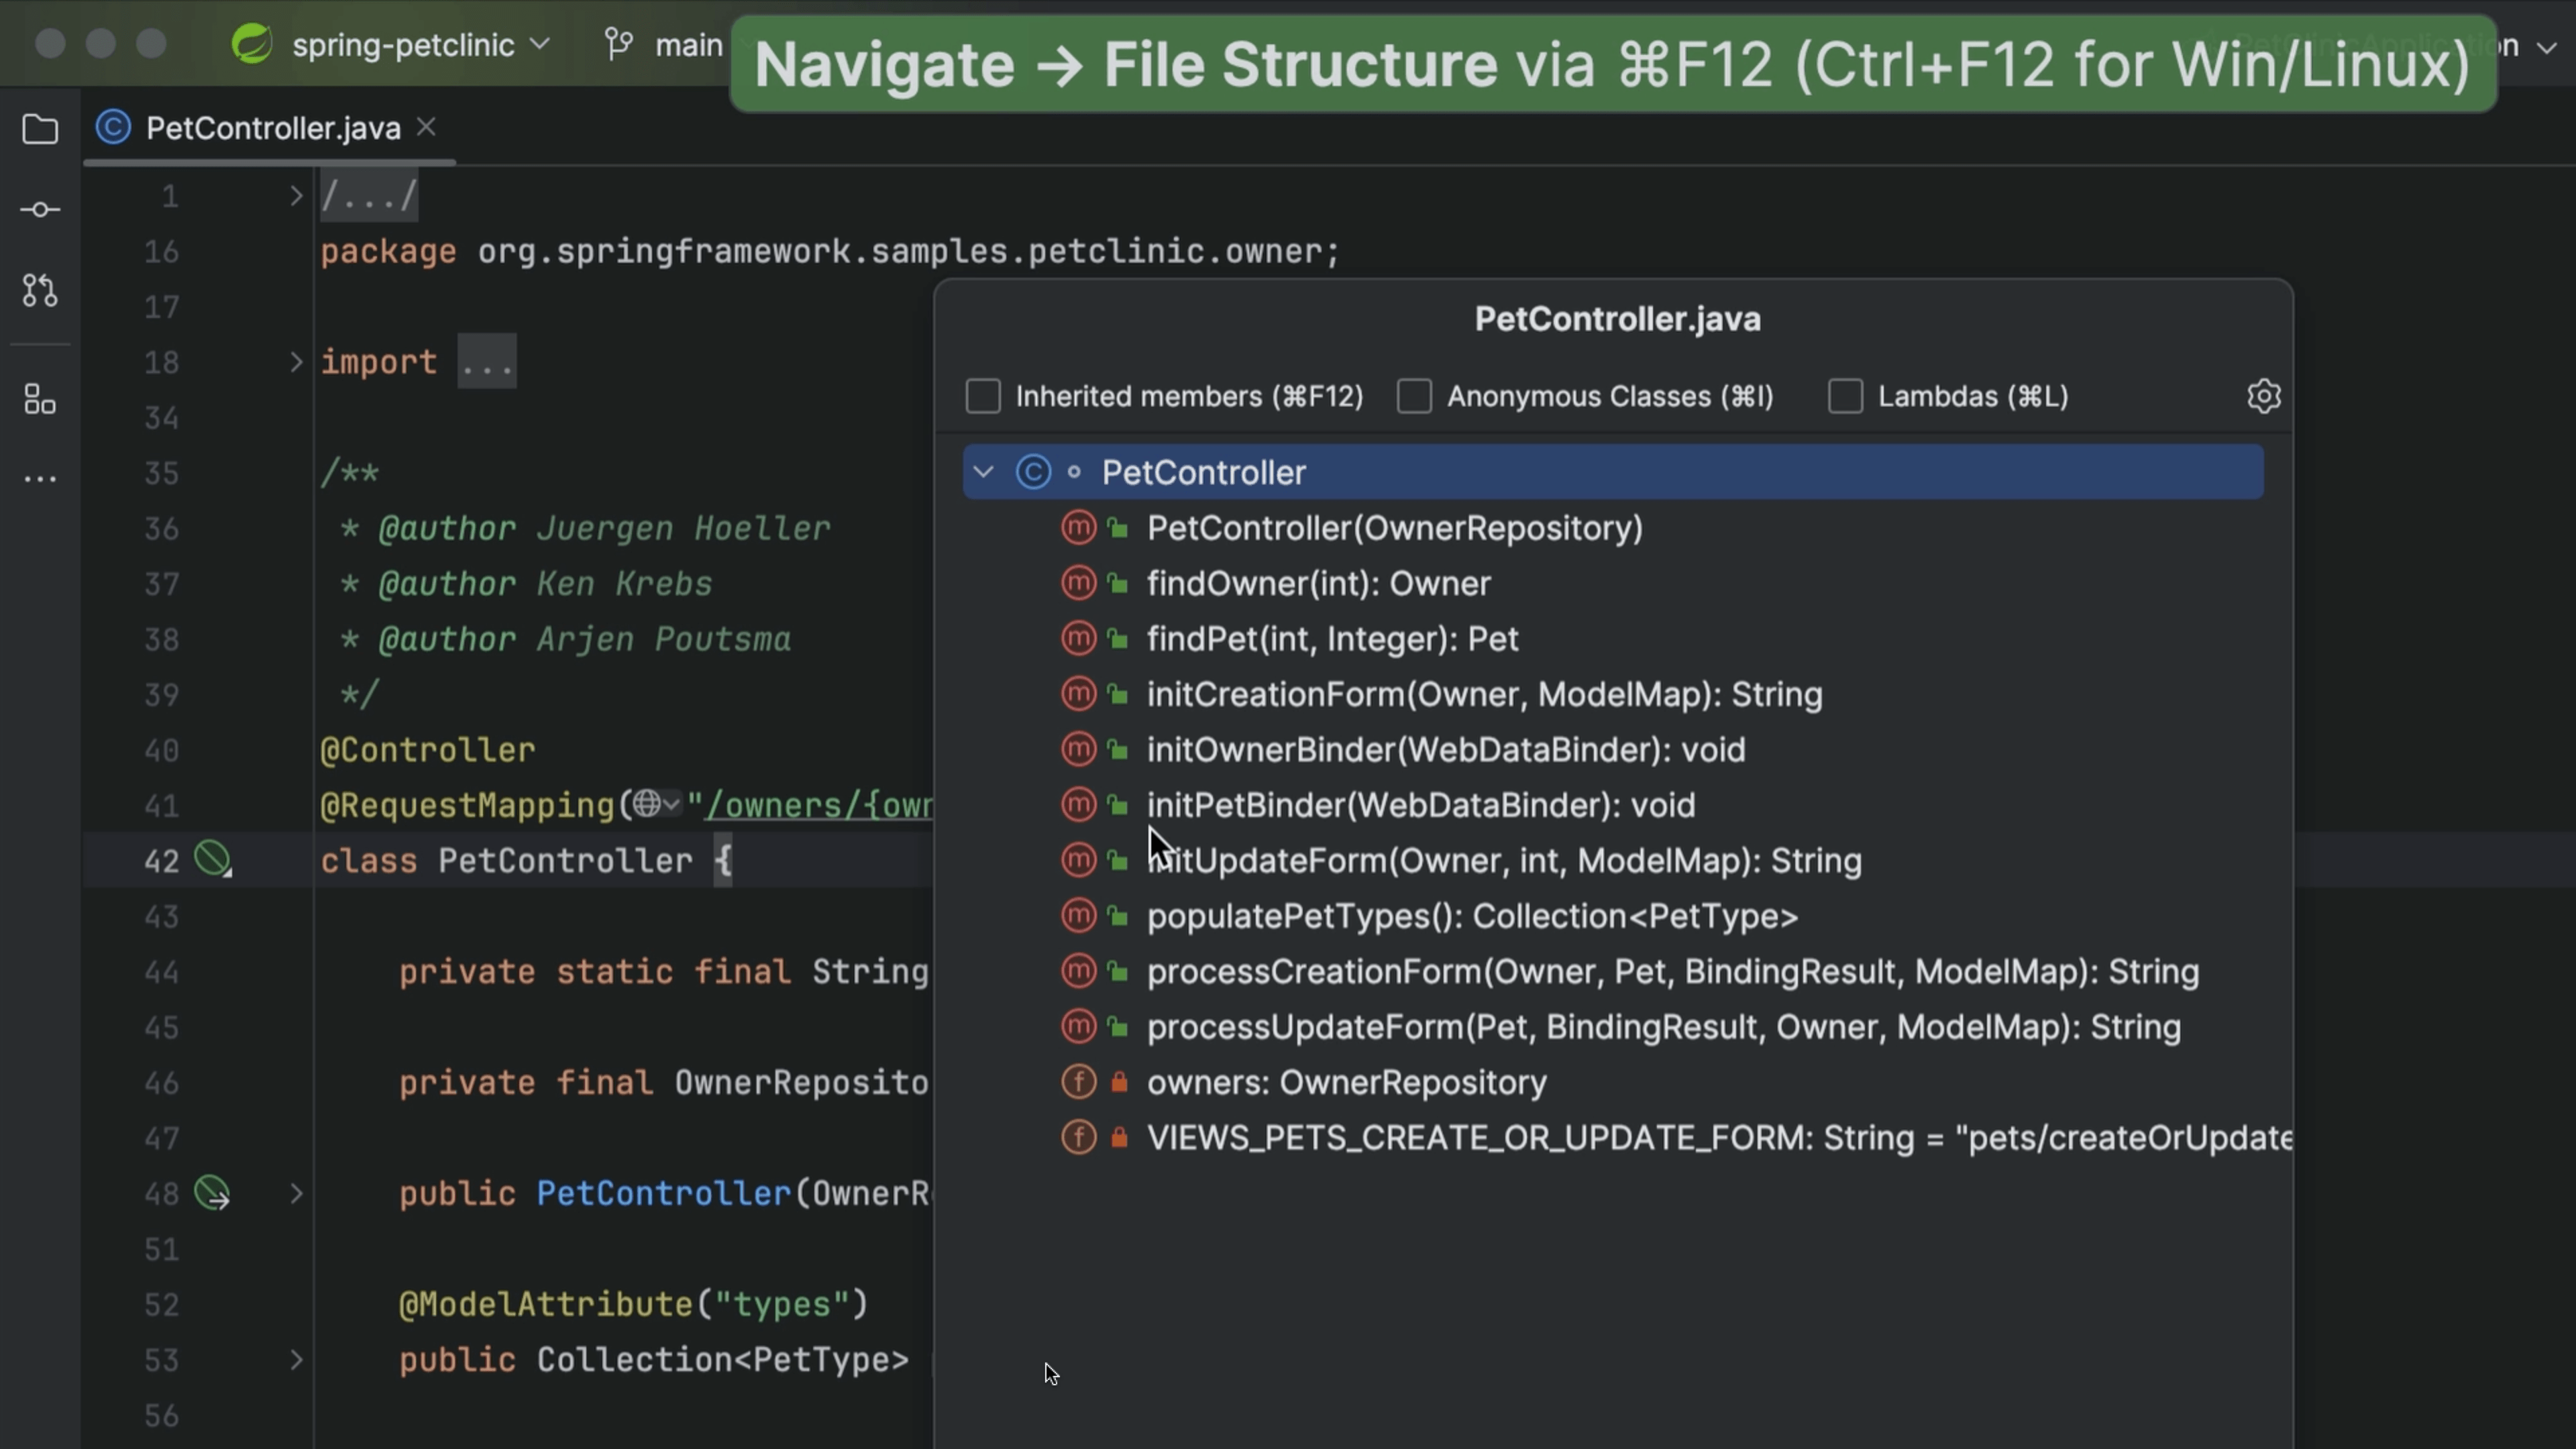 File Structure